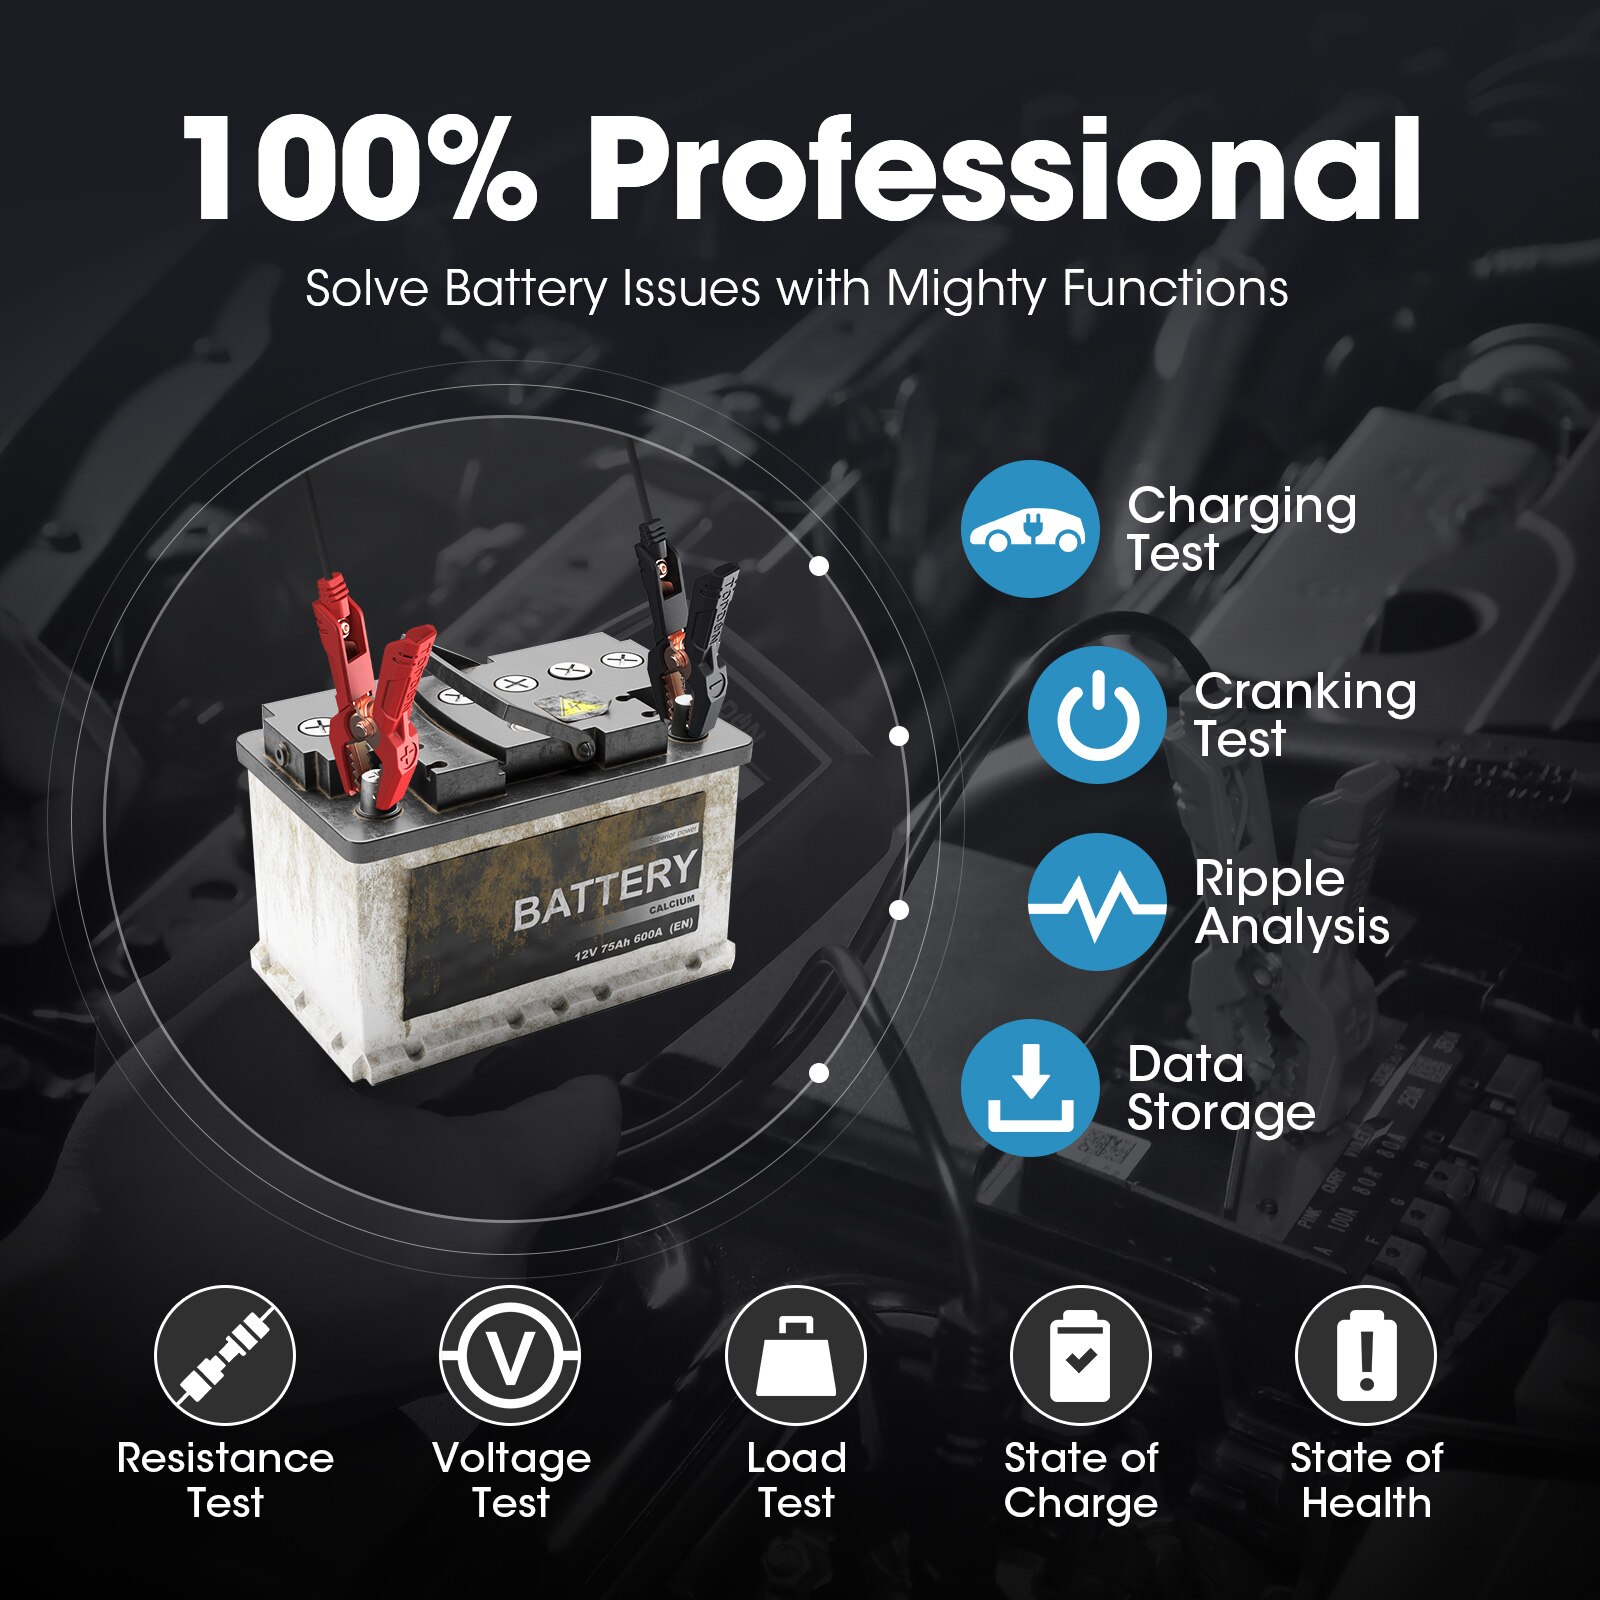 Topdon Car Battery Tester BT200 Digital Automotive Diagnostic Scanner 12V Cranking Charging Circut Tester Battery Analyzer Tools